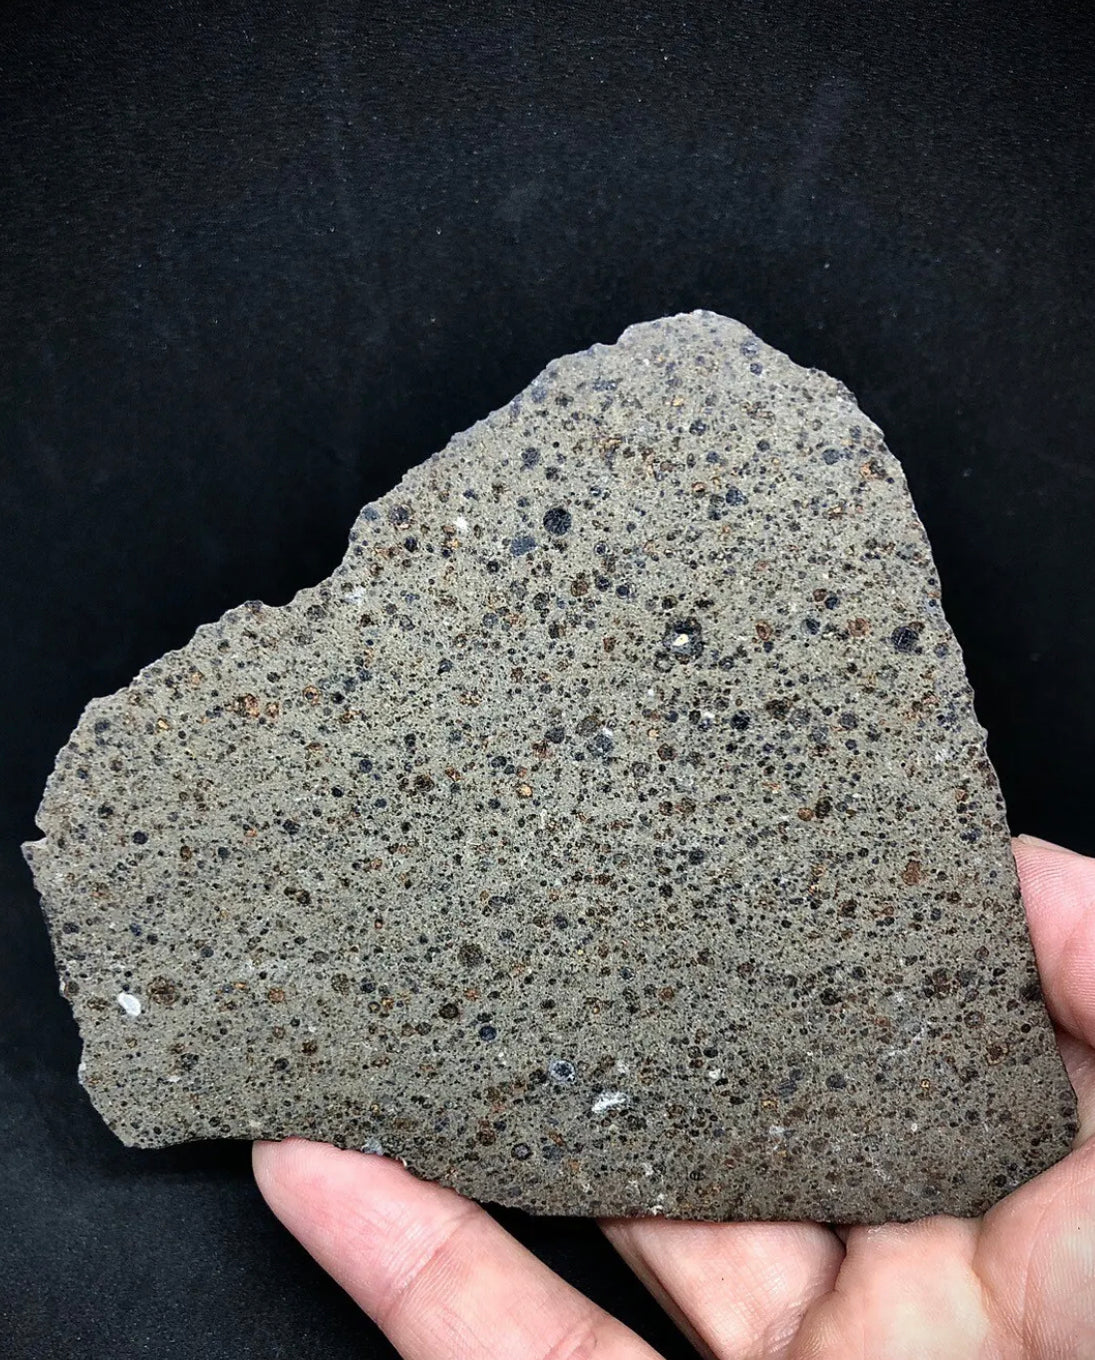 NWA 16314 Carbonaceous Chondrite CK5 Meteorite End Cut w/ Fusion Crust - 281.9g